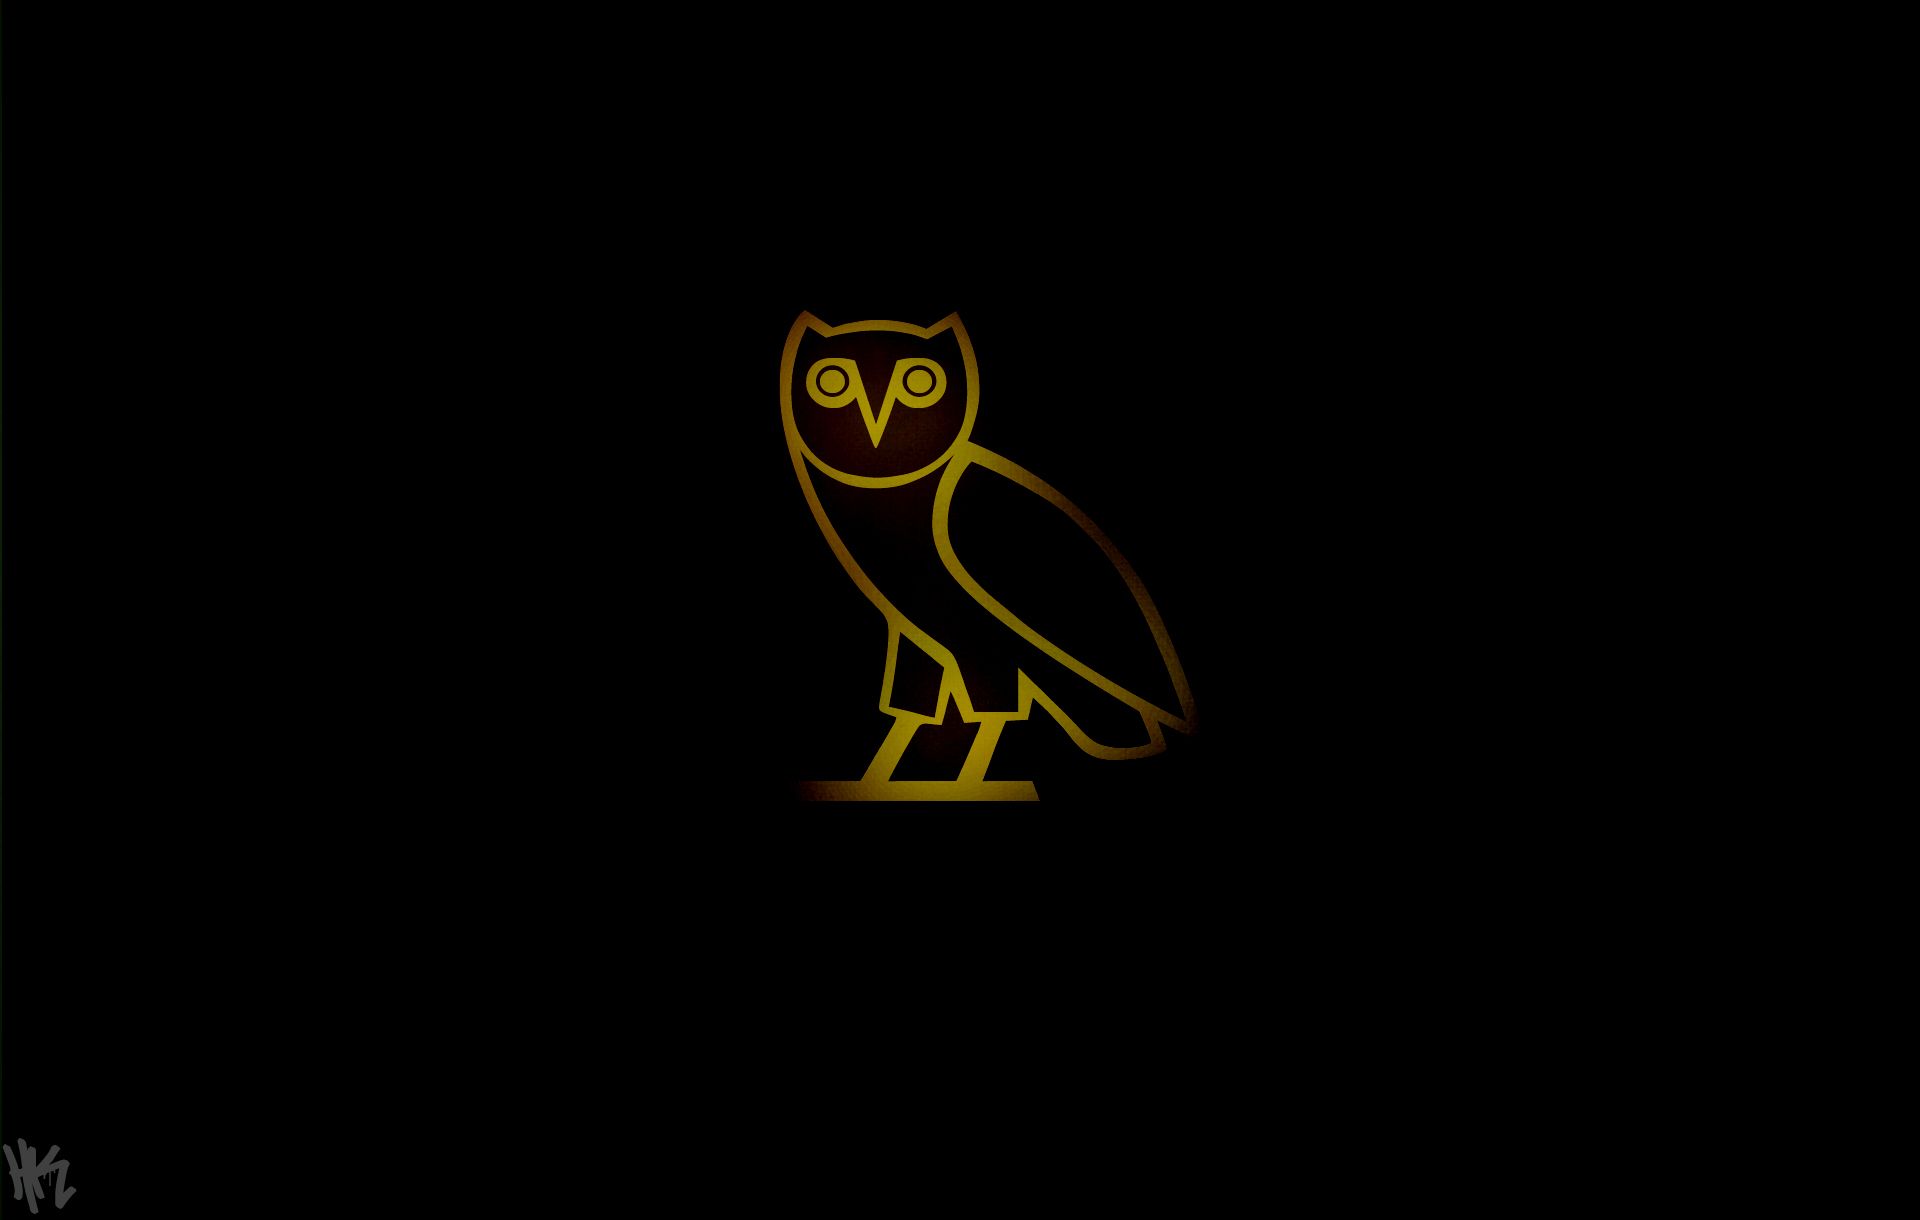 Drake Owl OVO iPhone Wallpaper on .wallpaperafari.com